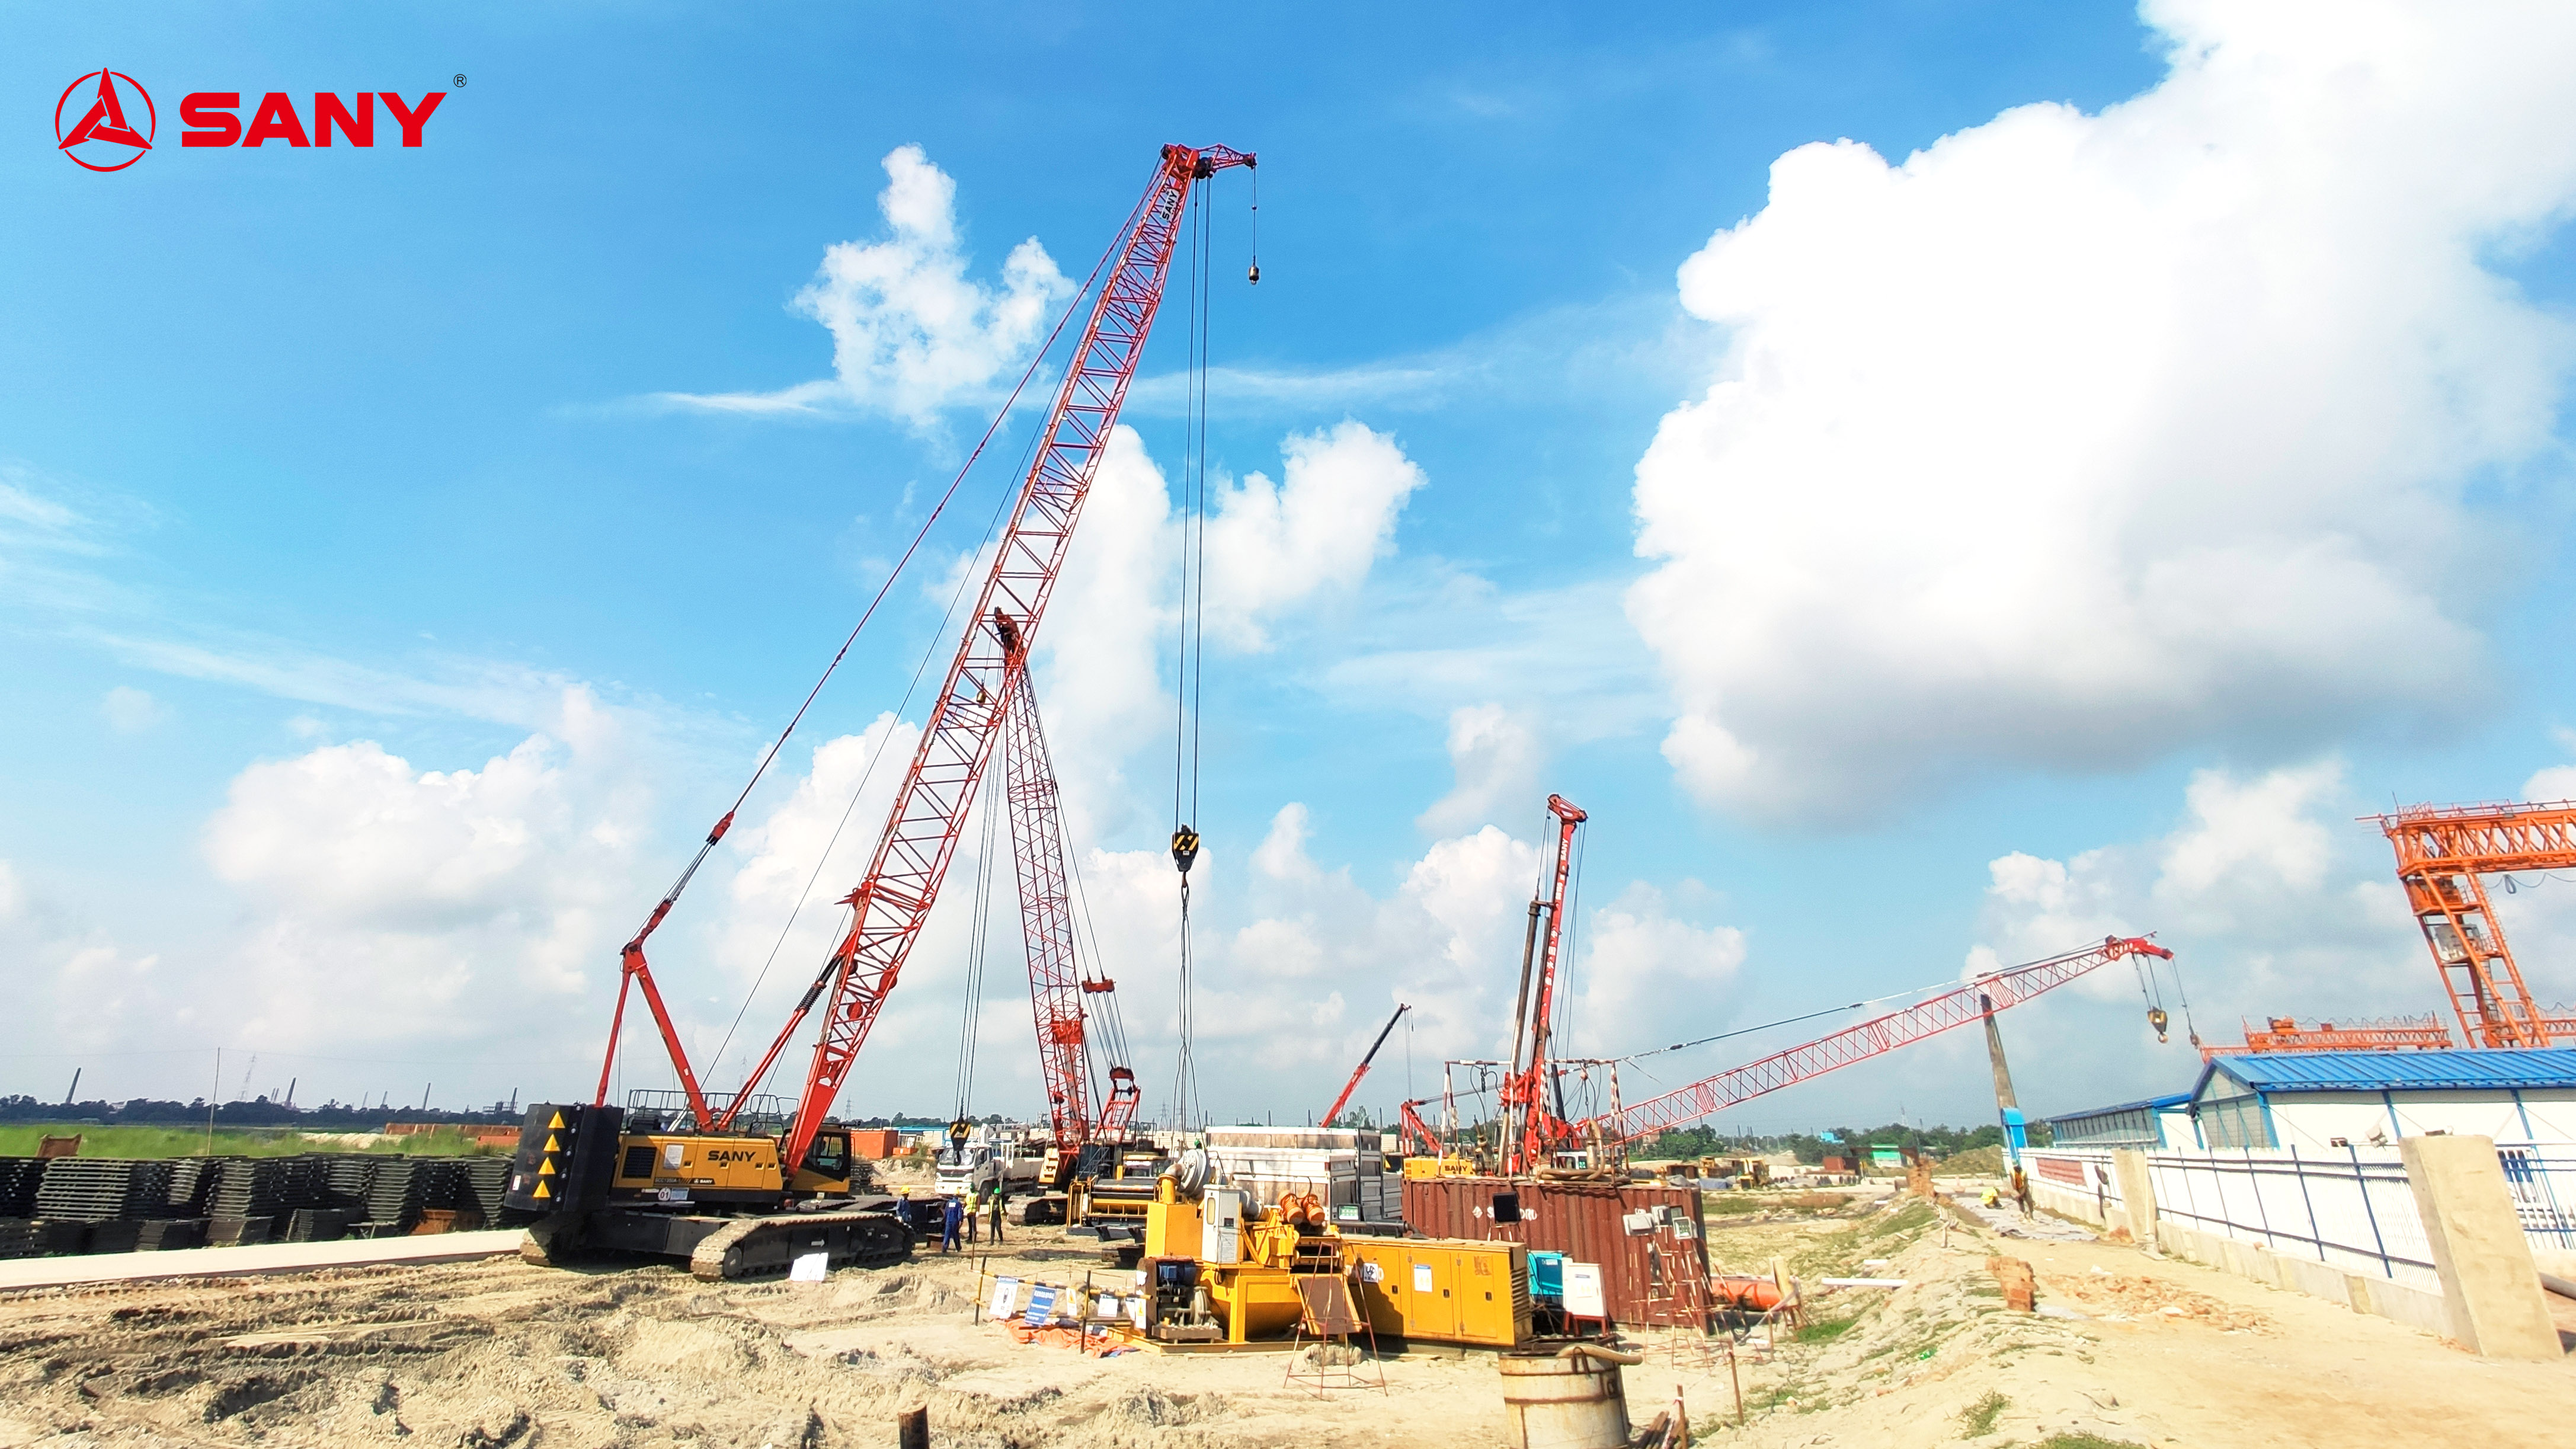 Sany Crane assisted the successful closure of the main steel girder of Padma Bridge in Bangladesh